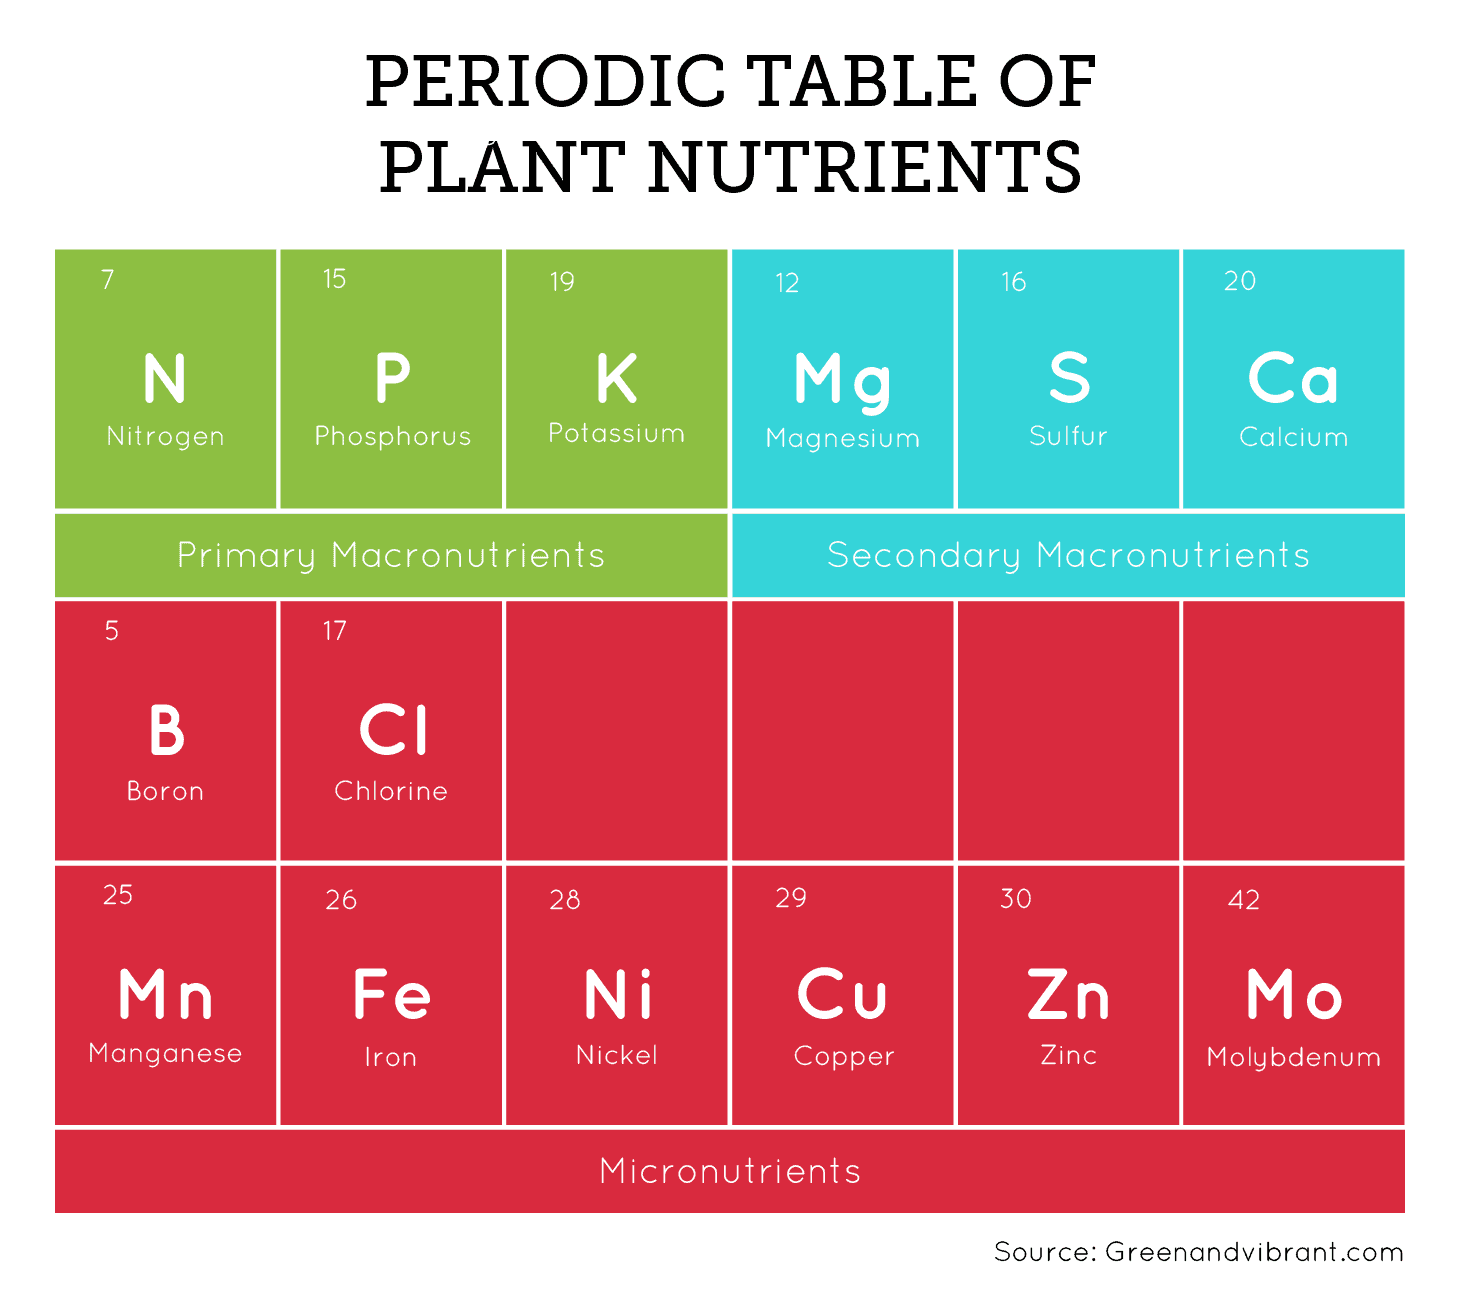 Plant Nutrients - Primary Macronutrients, Secondary Macronutrients, and Micronutrients